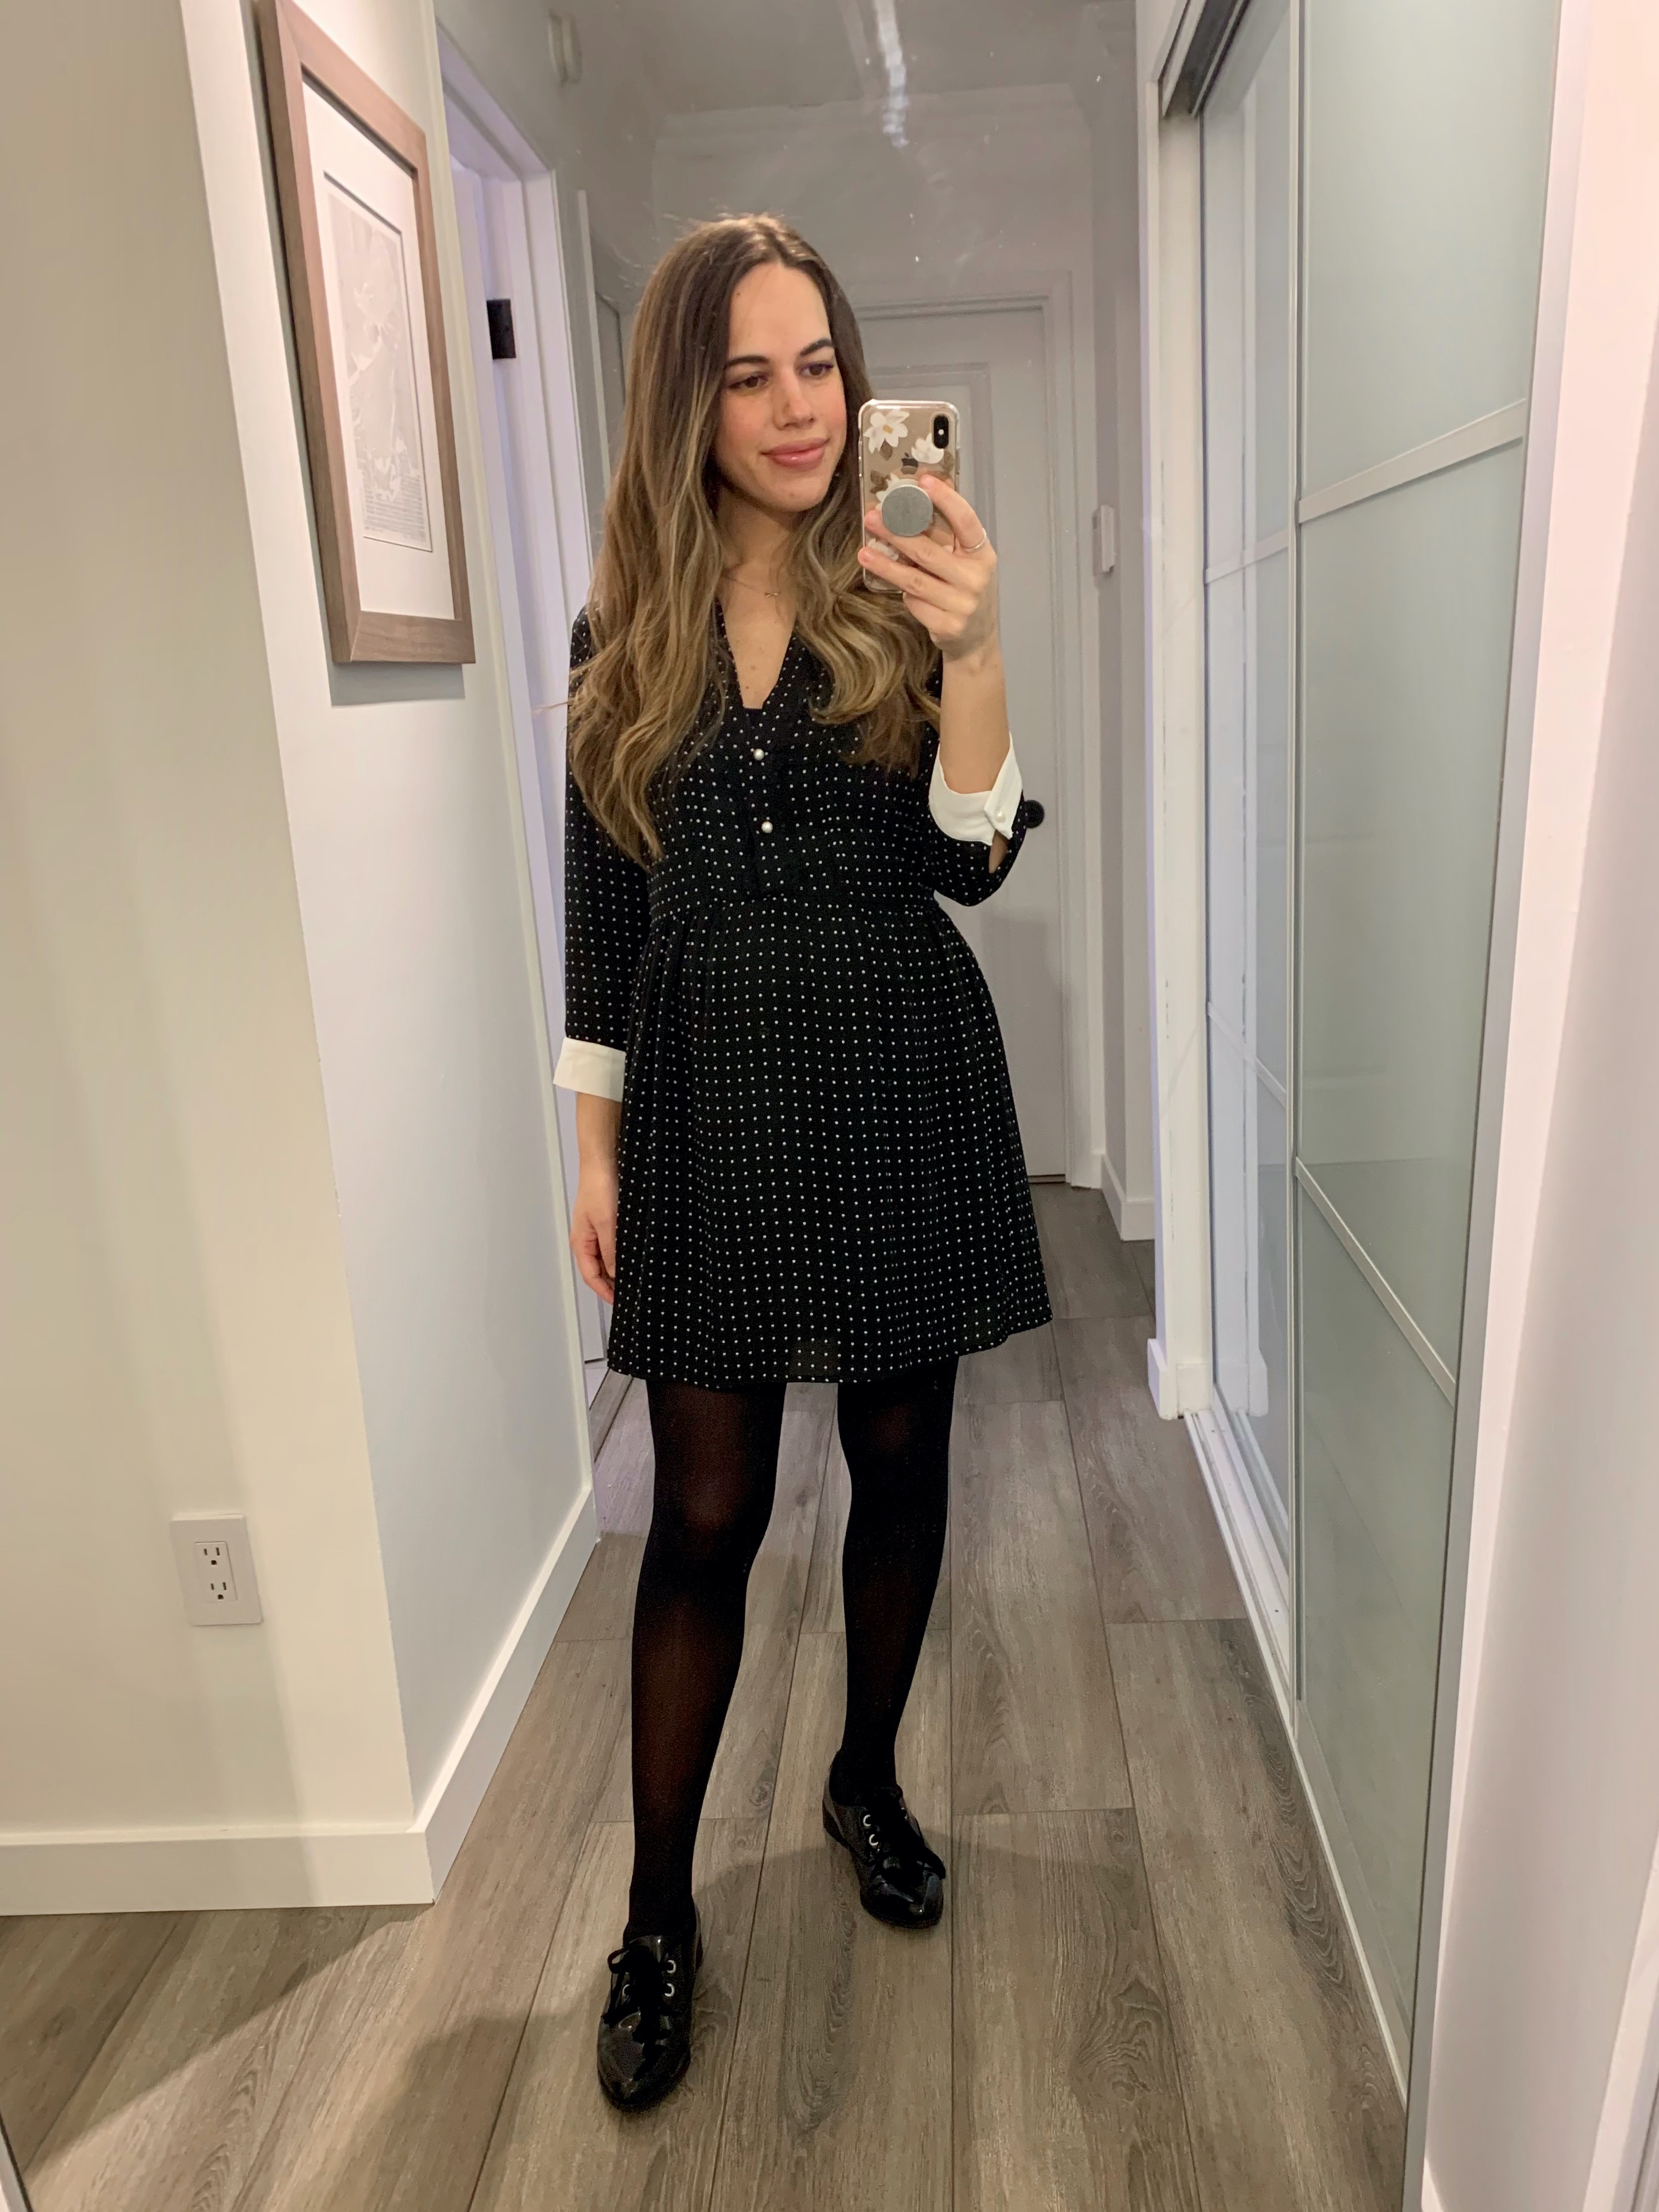 Jules in Flats - Polka Dot Mini Dress (Business Casual Workwear on a Budget)